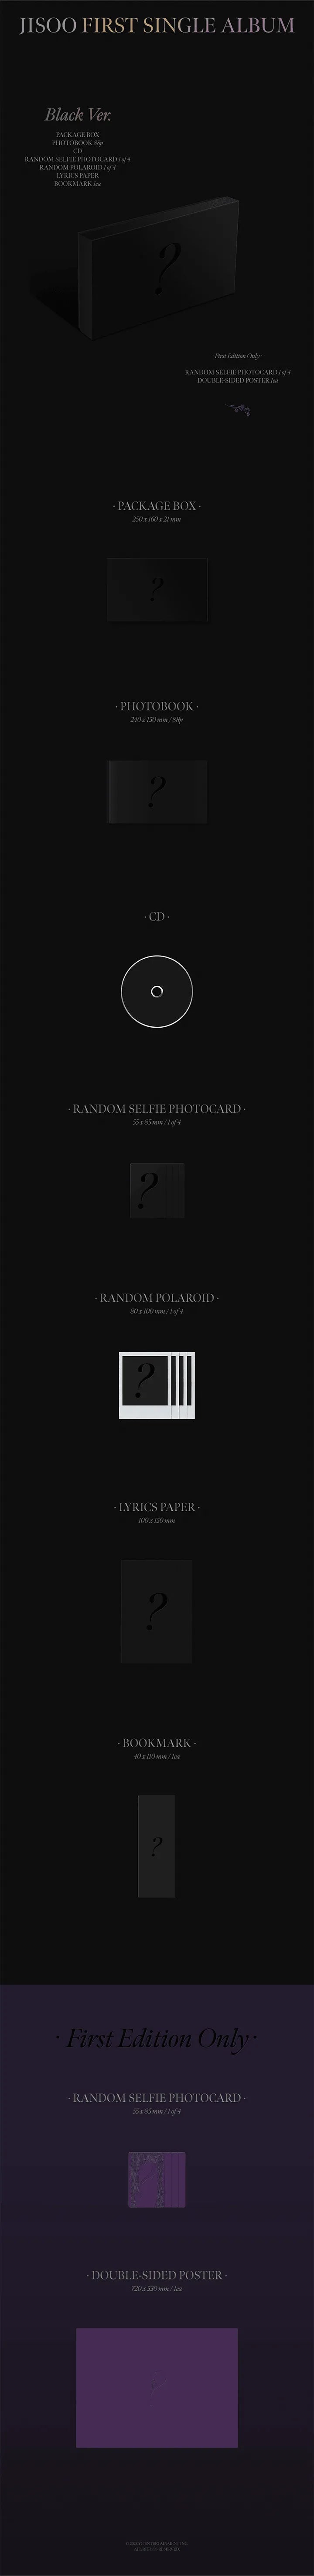 JISOO (BLACKPINK) - أول ألبوم منفرد 2 مجموعة